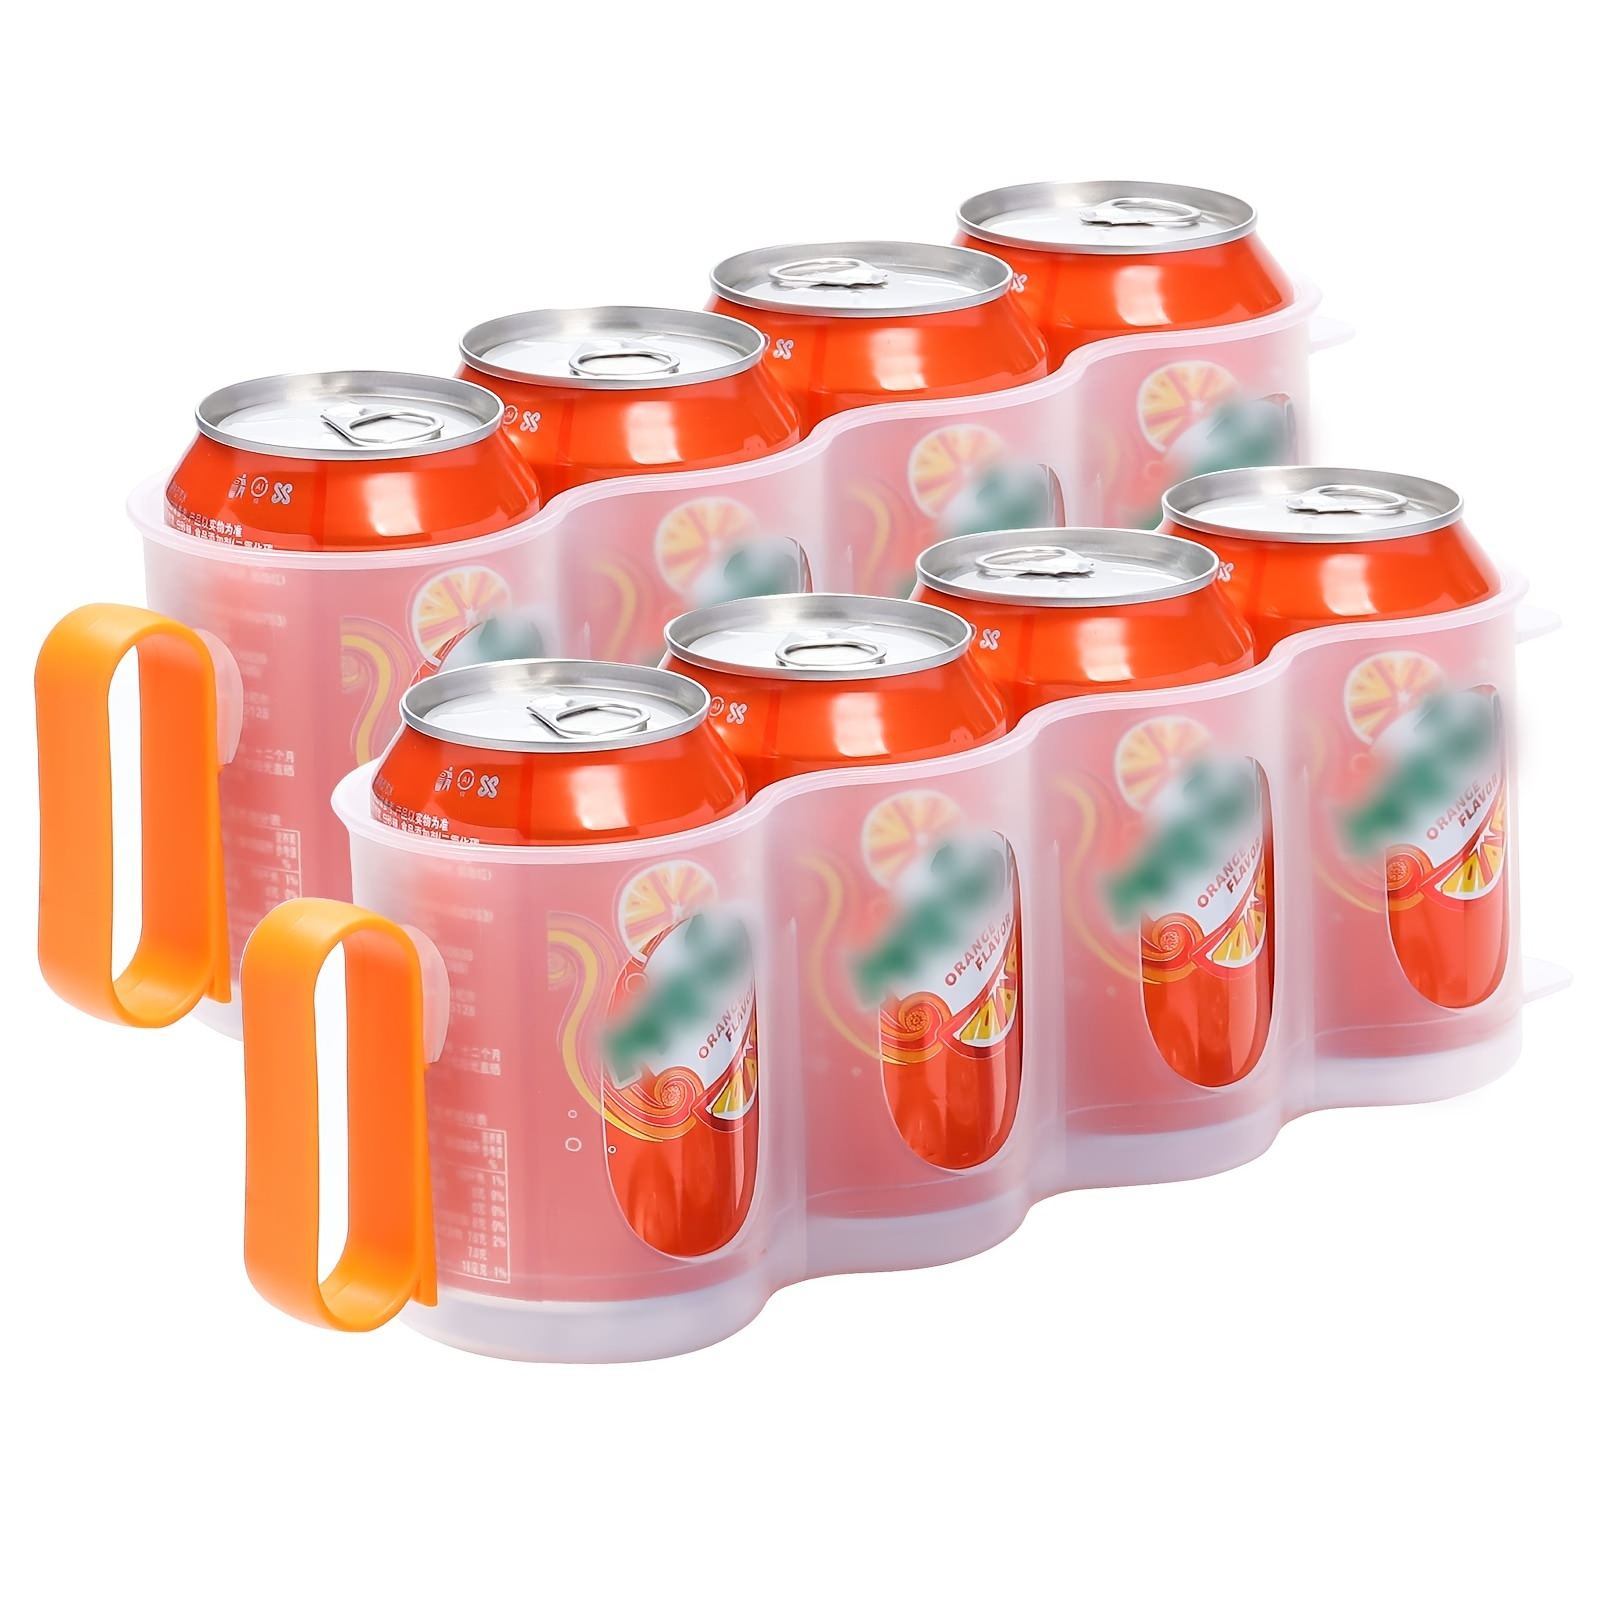 Portable Soda Can Organizer For Refrigerator, Clear Plastic Fridge